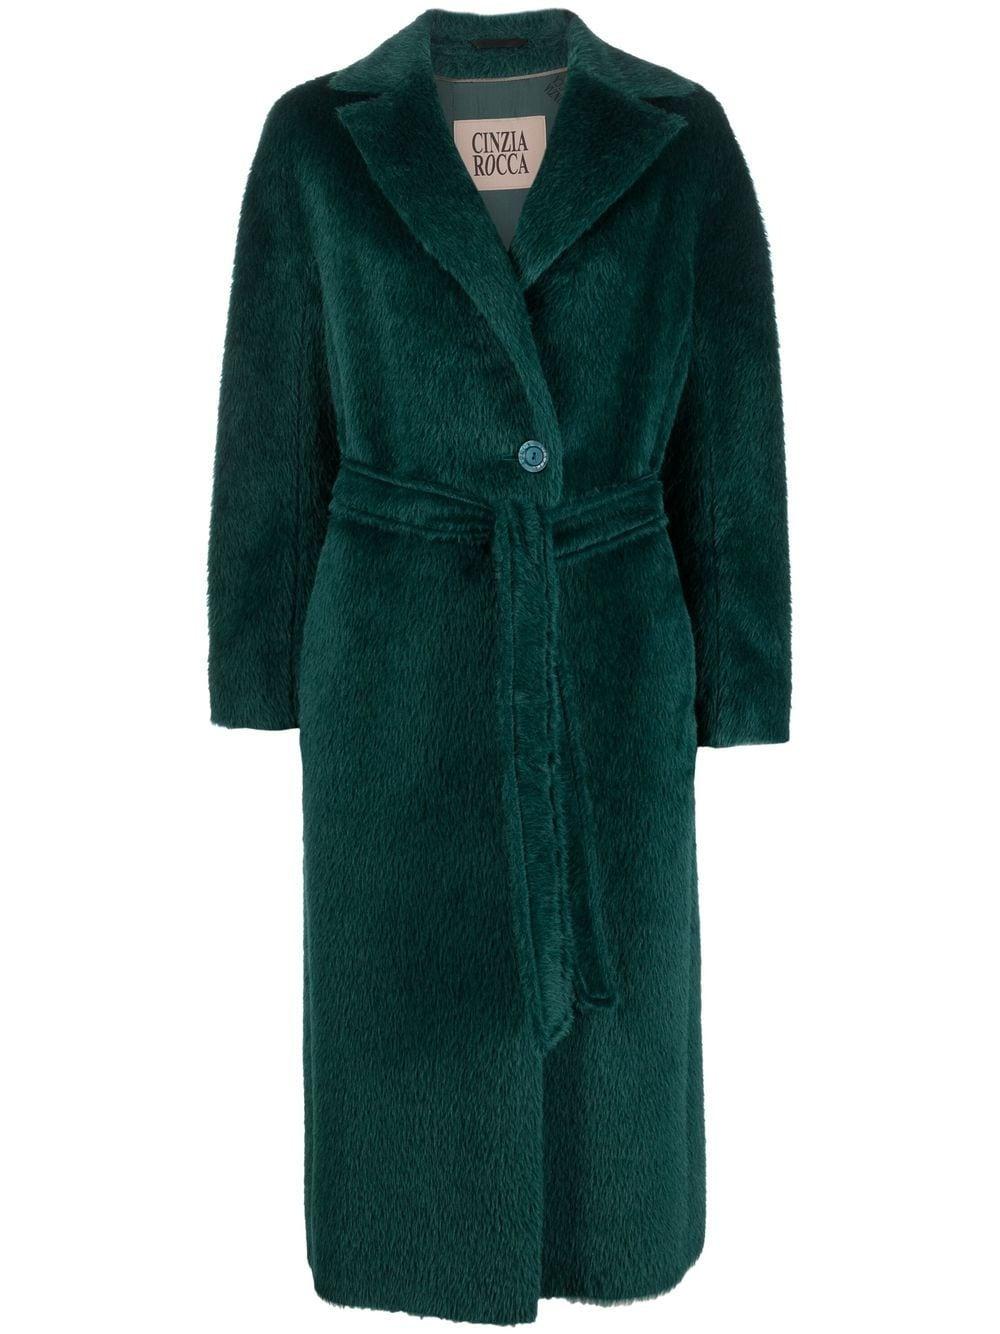 Cinzia Rocca Belted Alpaca-wool Coat in Green | Lyst Canada